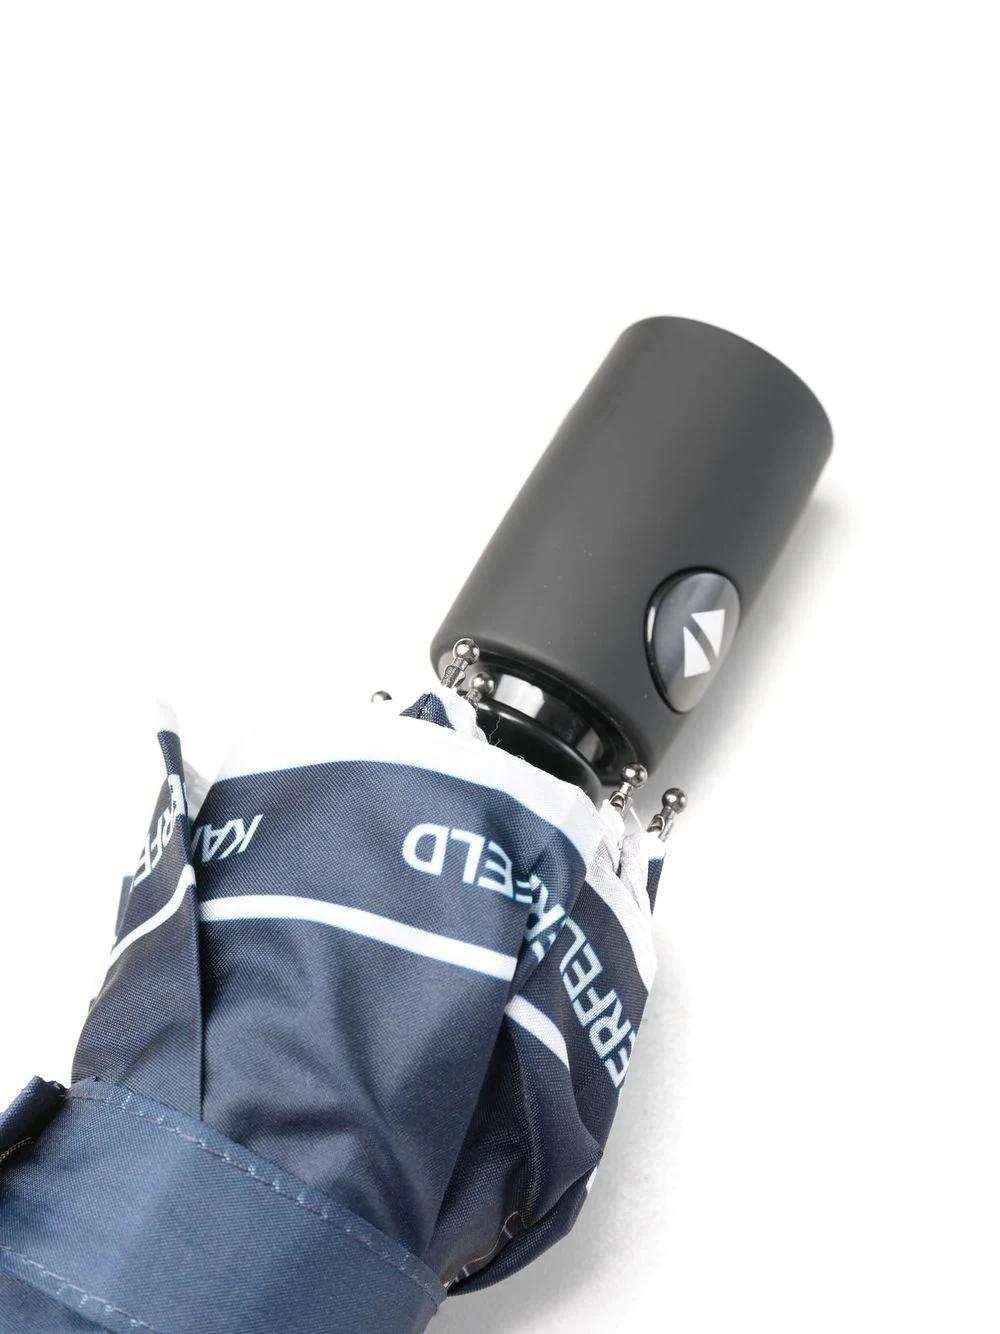 Paraguas Karl Lagerfeld azul ikonik ombre umbrella